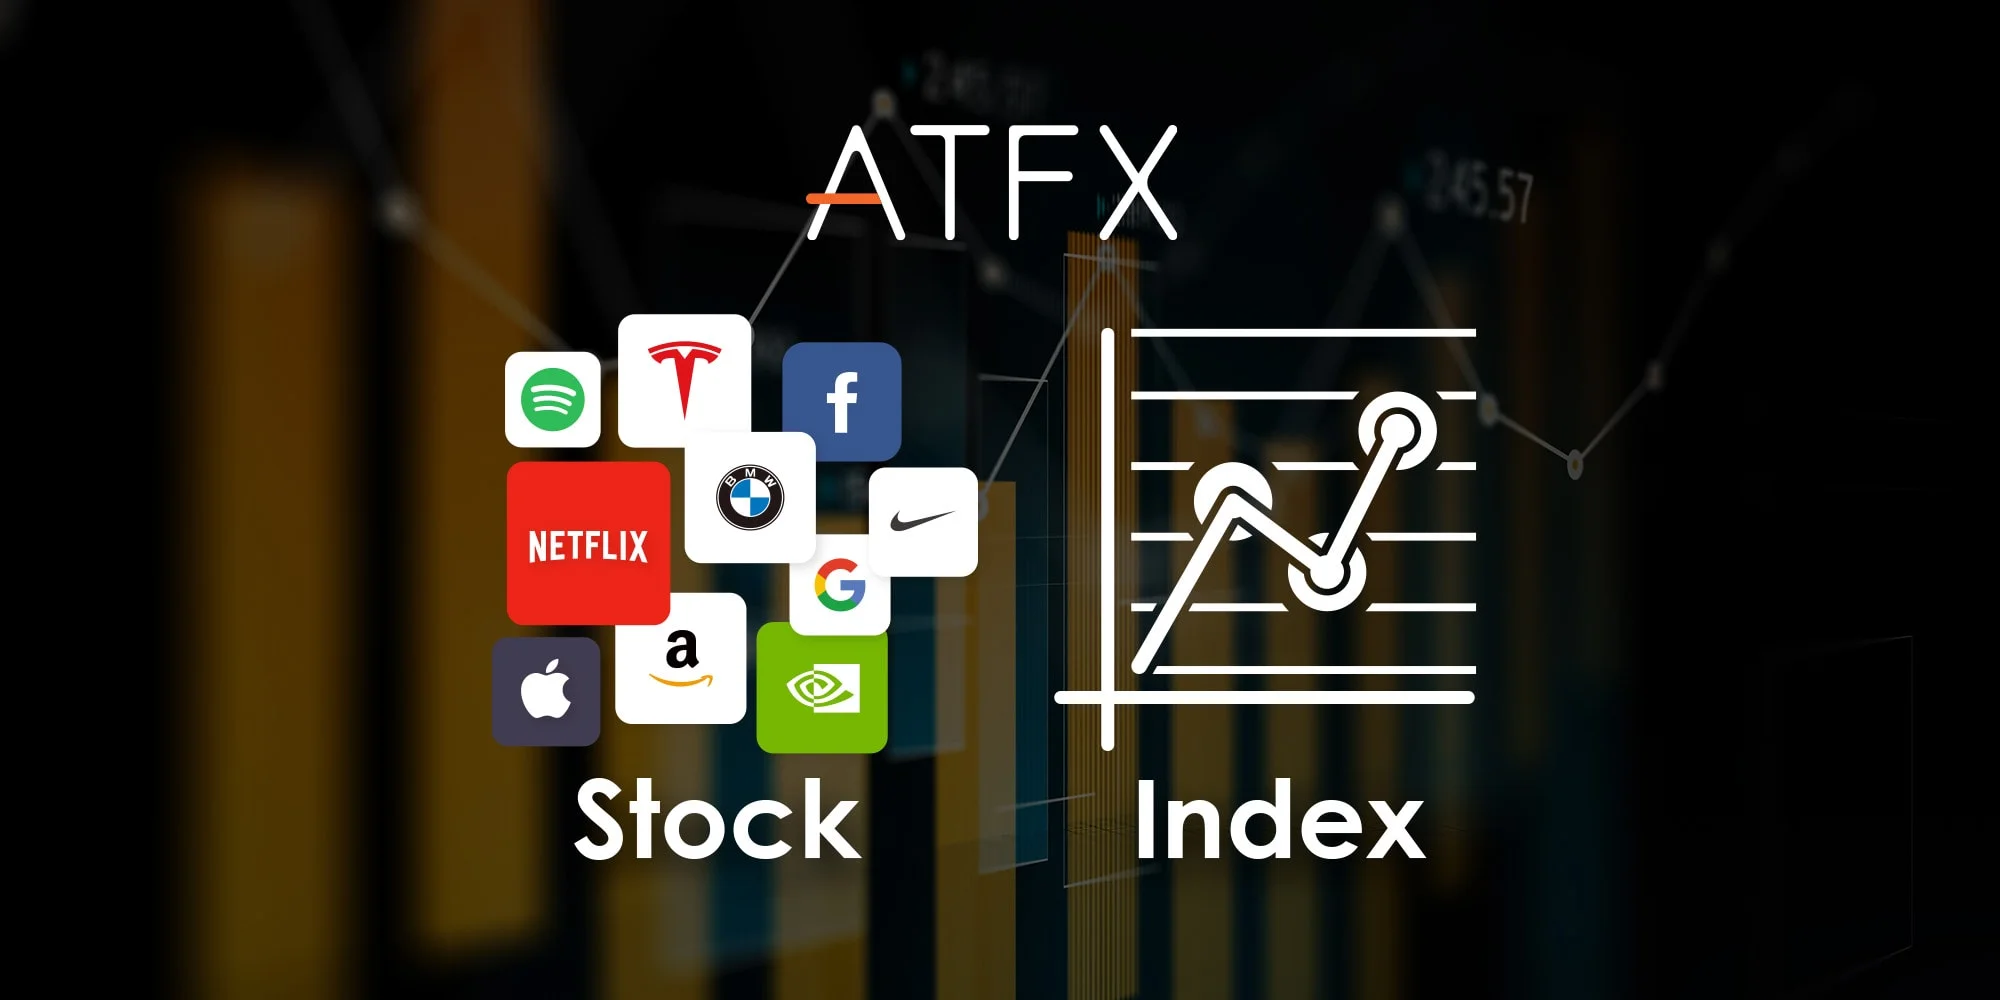 stock index